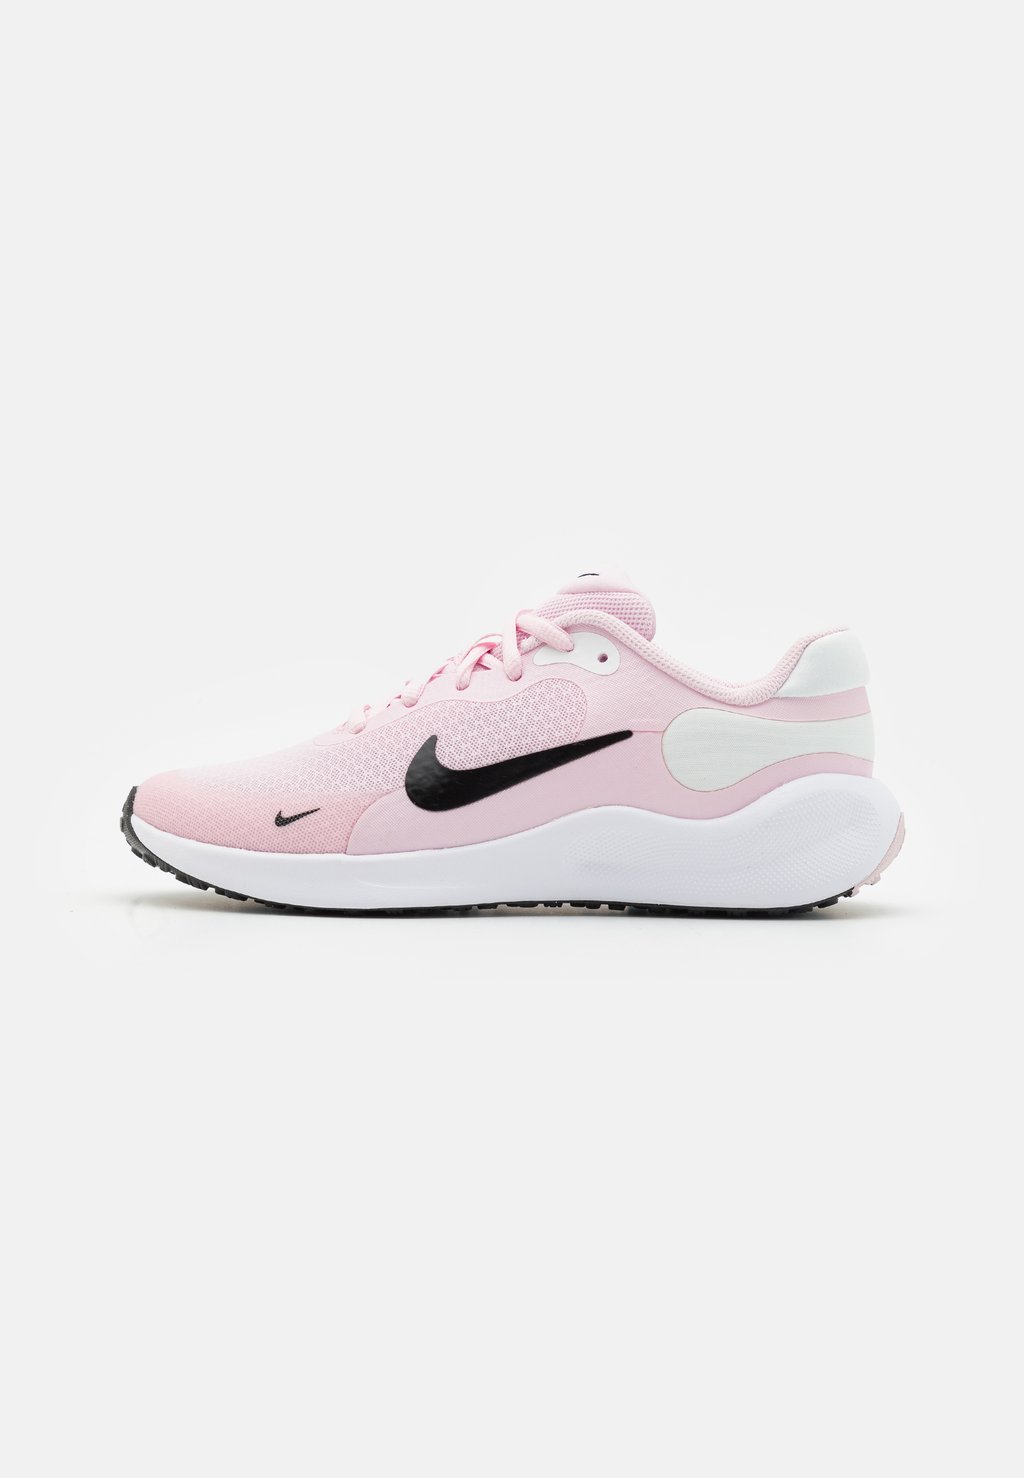 Нейтральные кроссовки Revolution 7 Unisex Nike, цвет pink foam/black/summit white/white